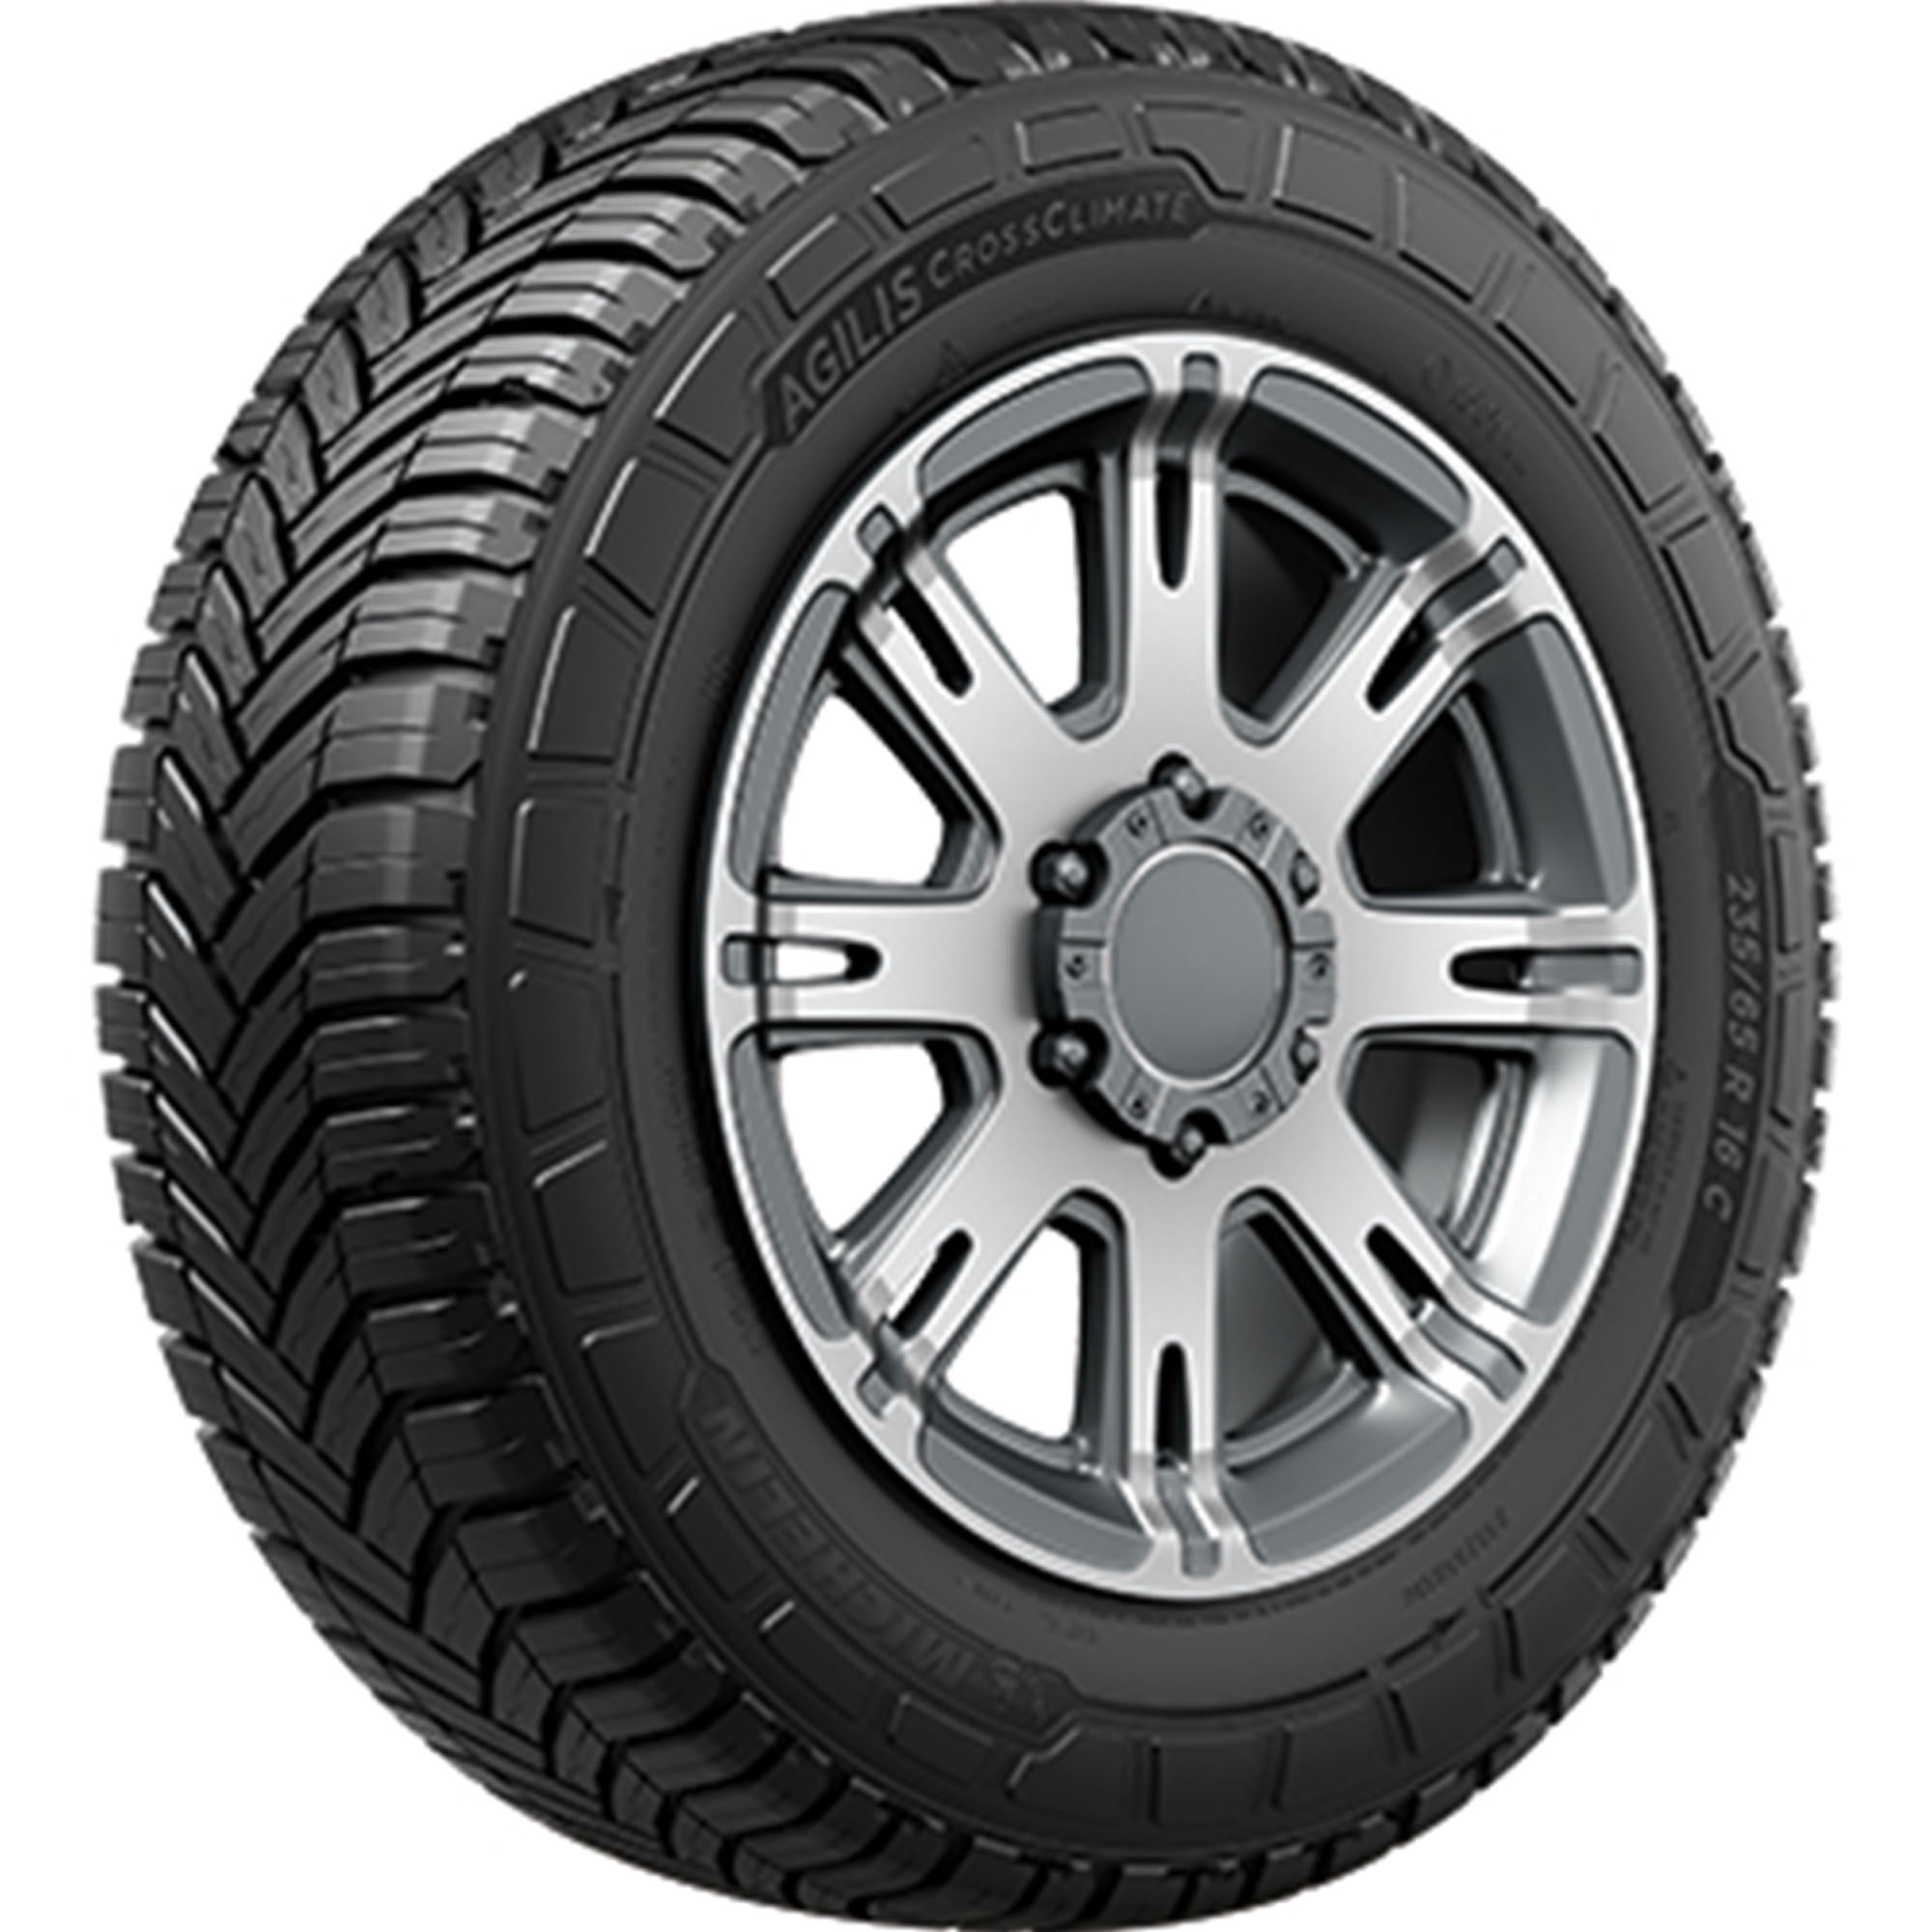 LT245/75R16 Agilis E Tire 120/116R Van Light Michelin Truck CrossClimate Commercial